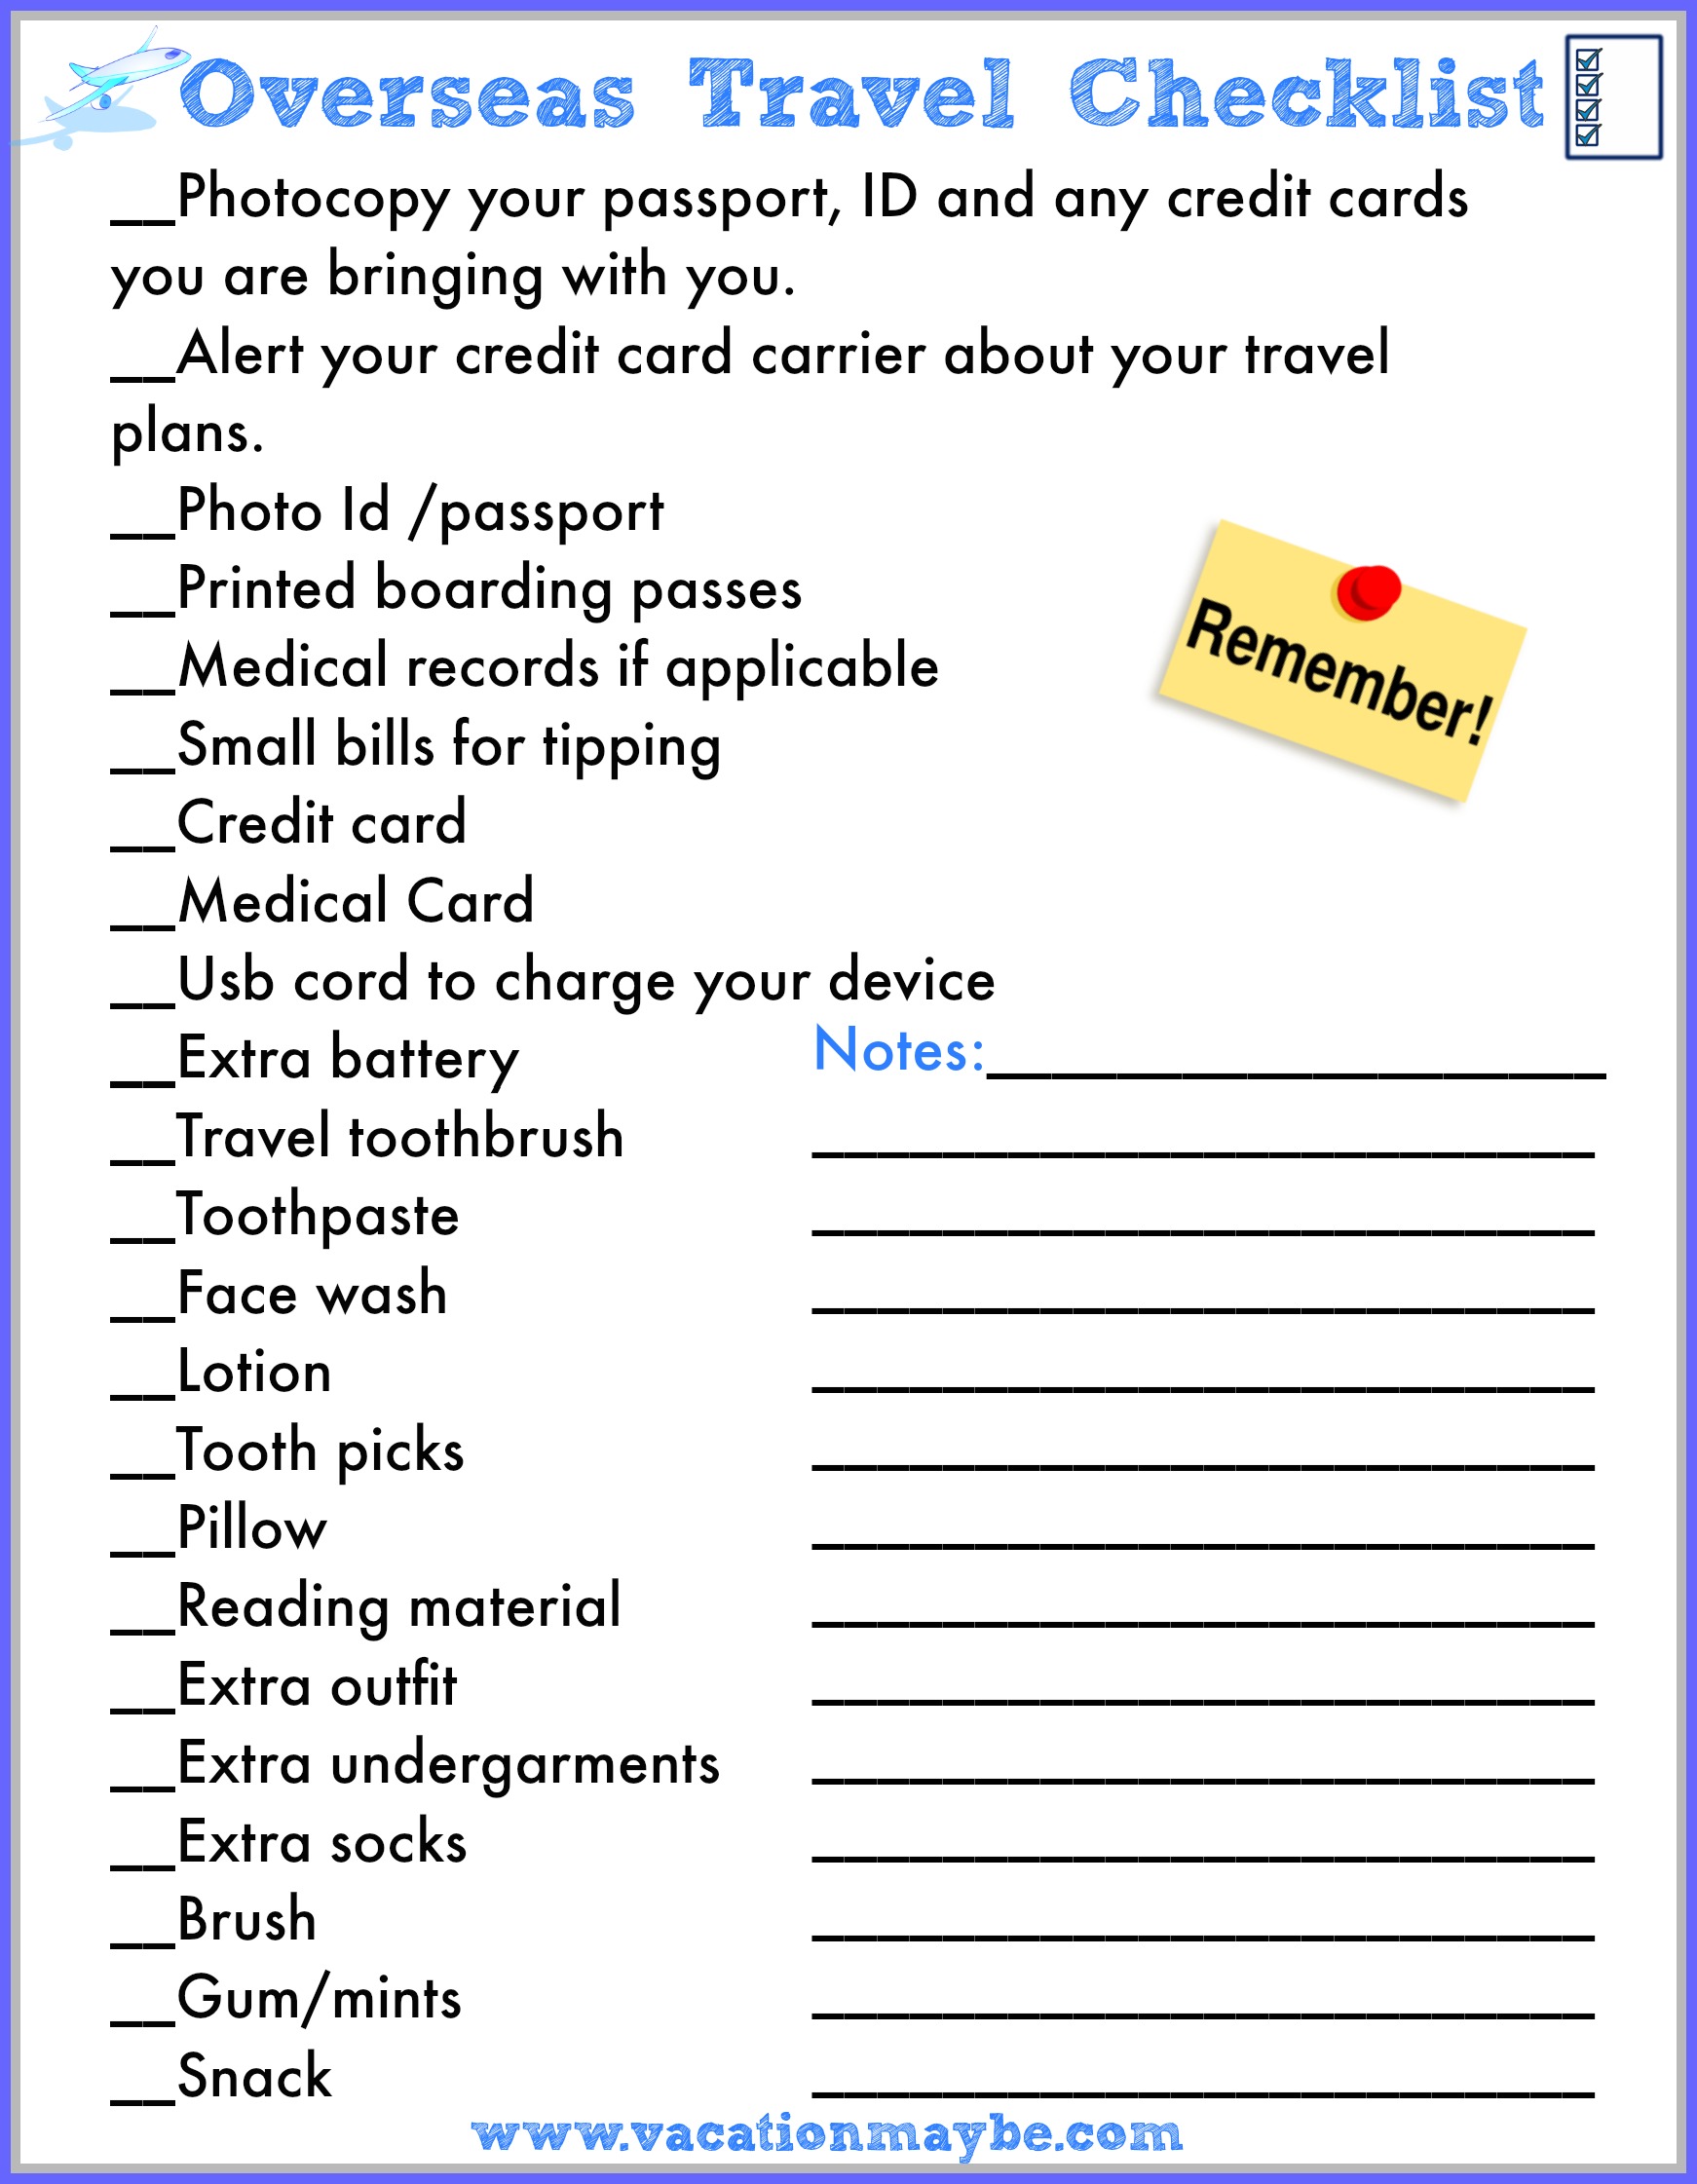 Overseas Travel Checklist Printable